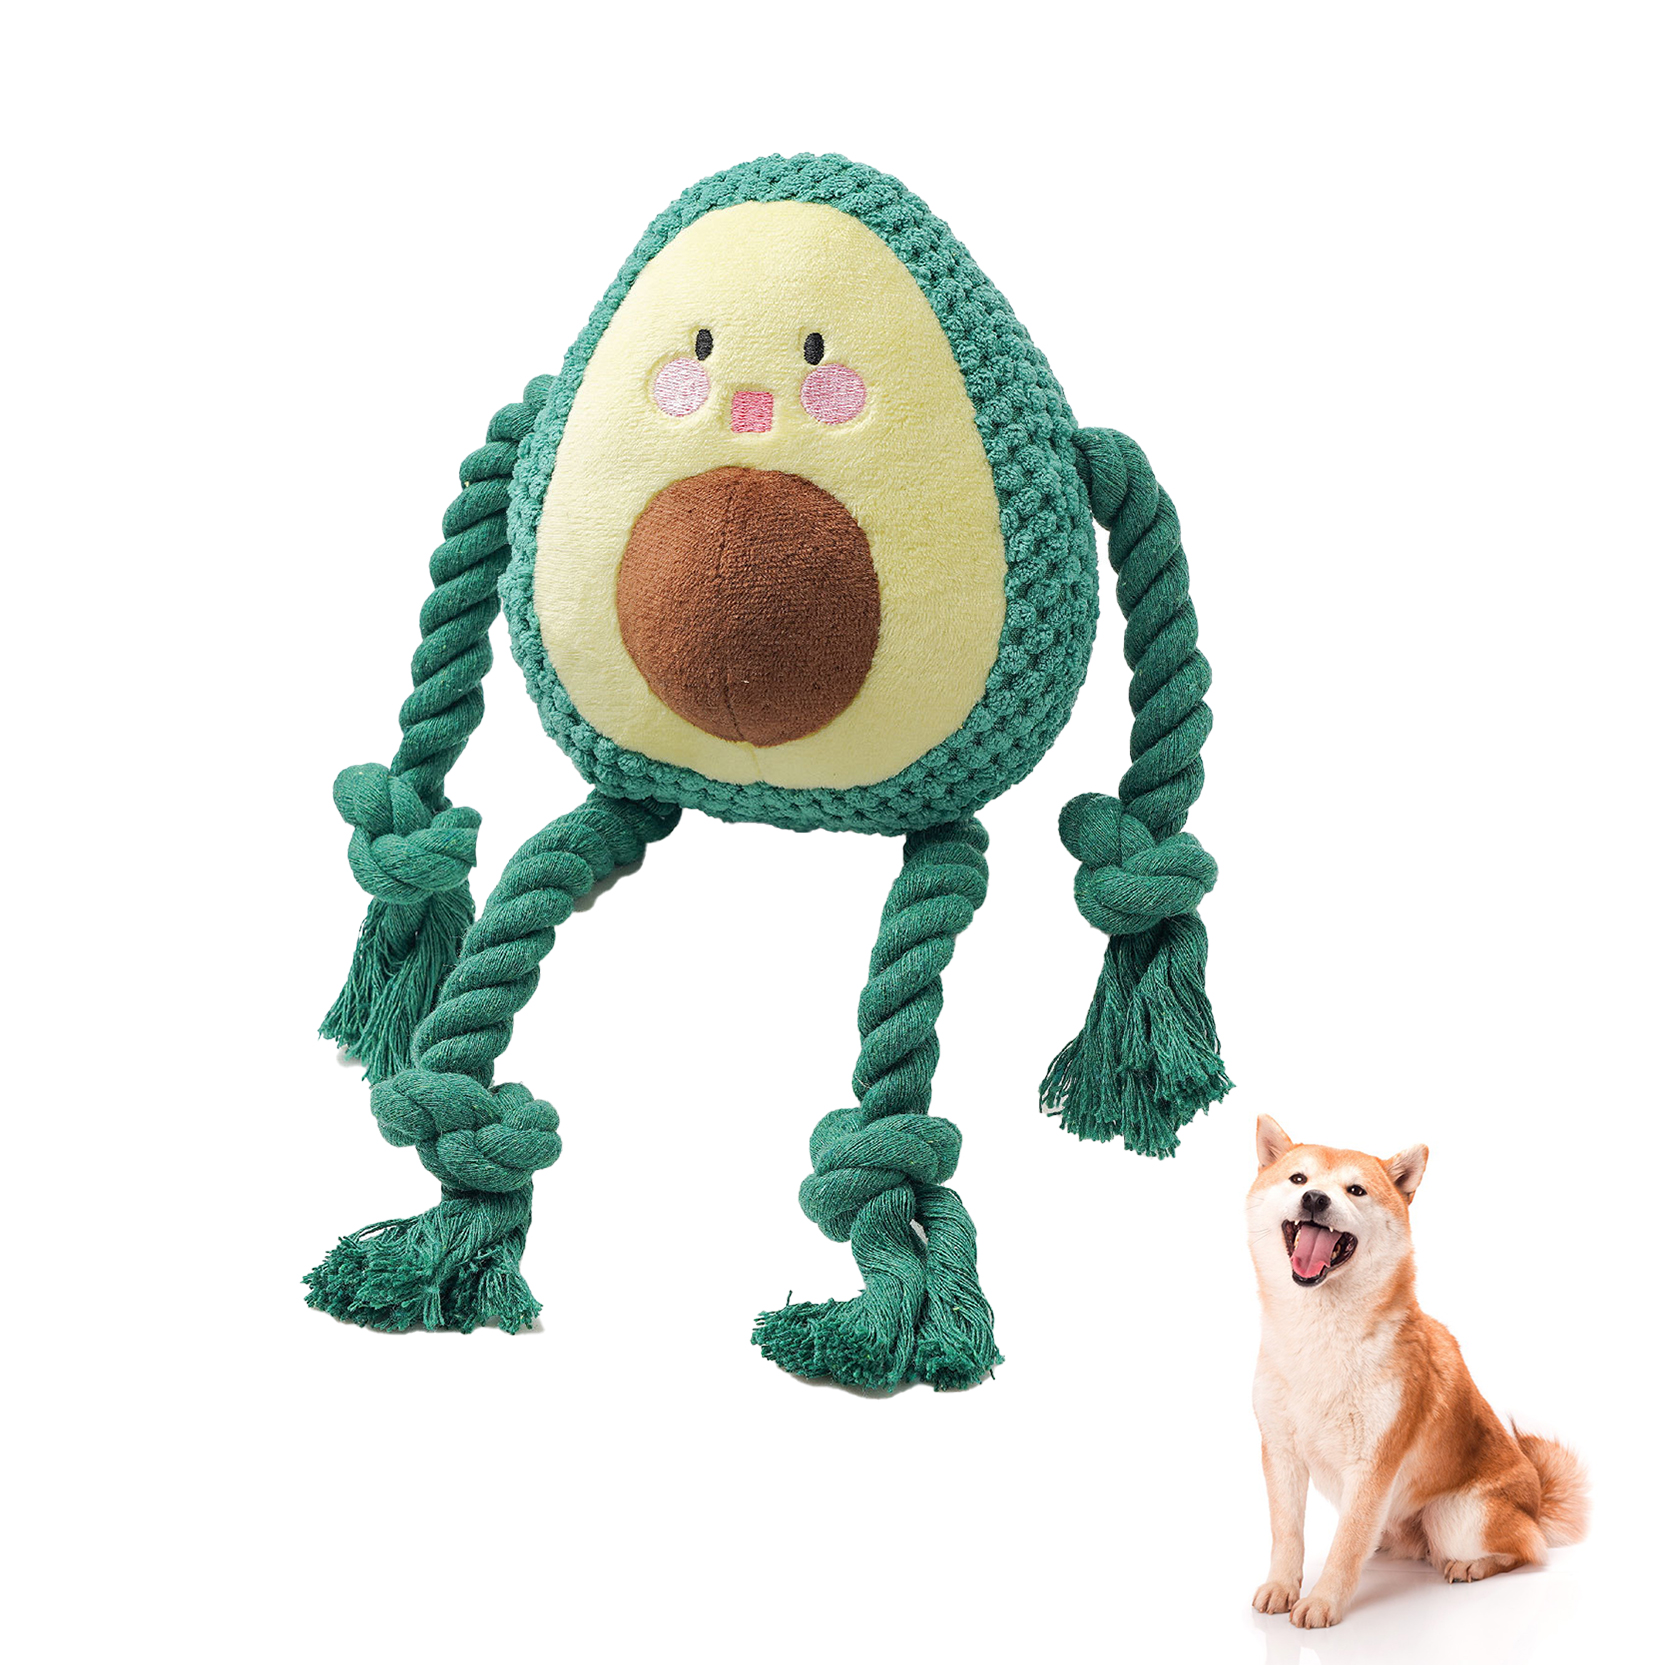 2022 Hot Sale New Wholesale Avocado Cute Shape Design Squaky Plush Toy